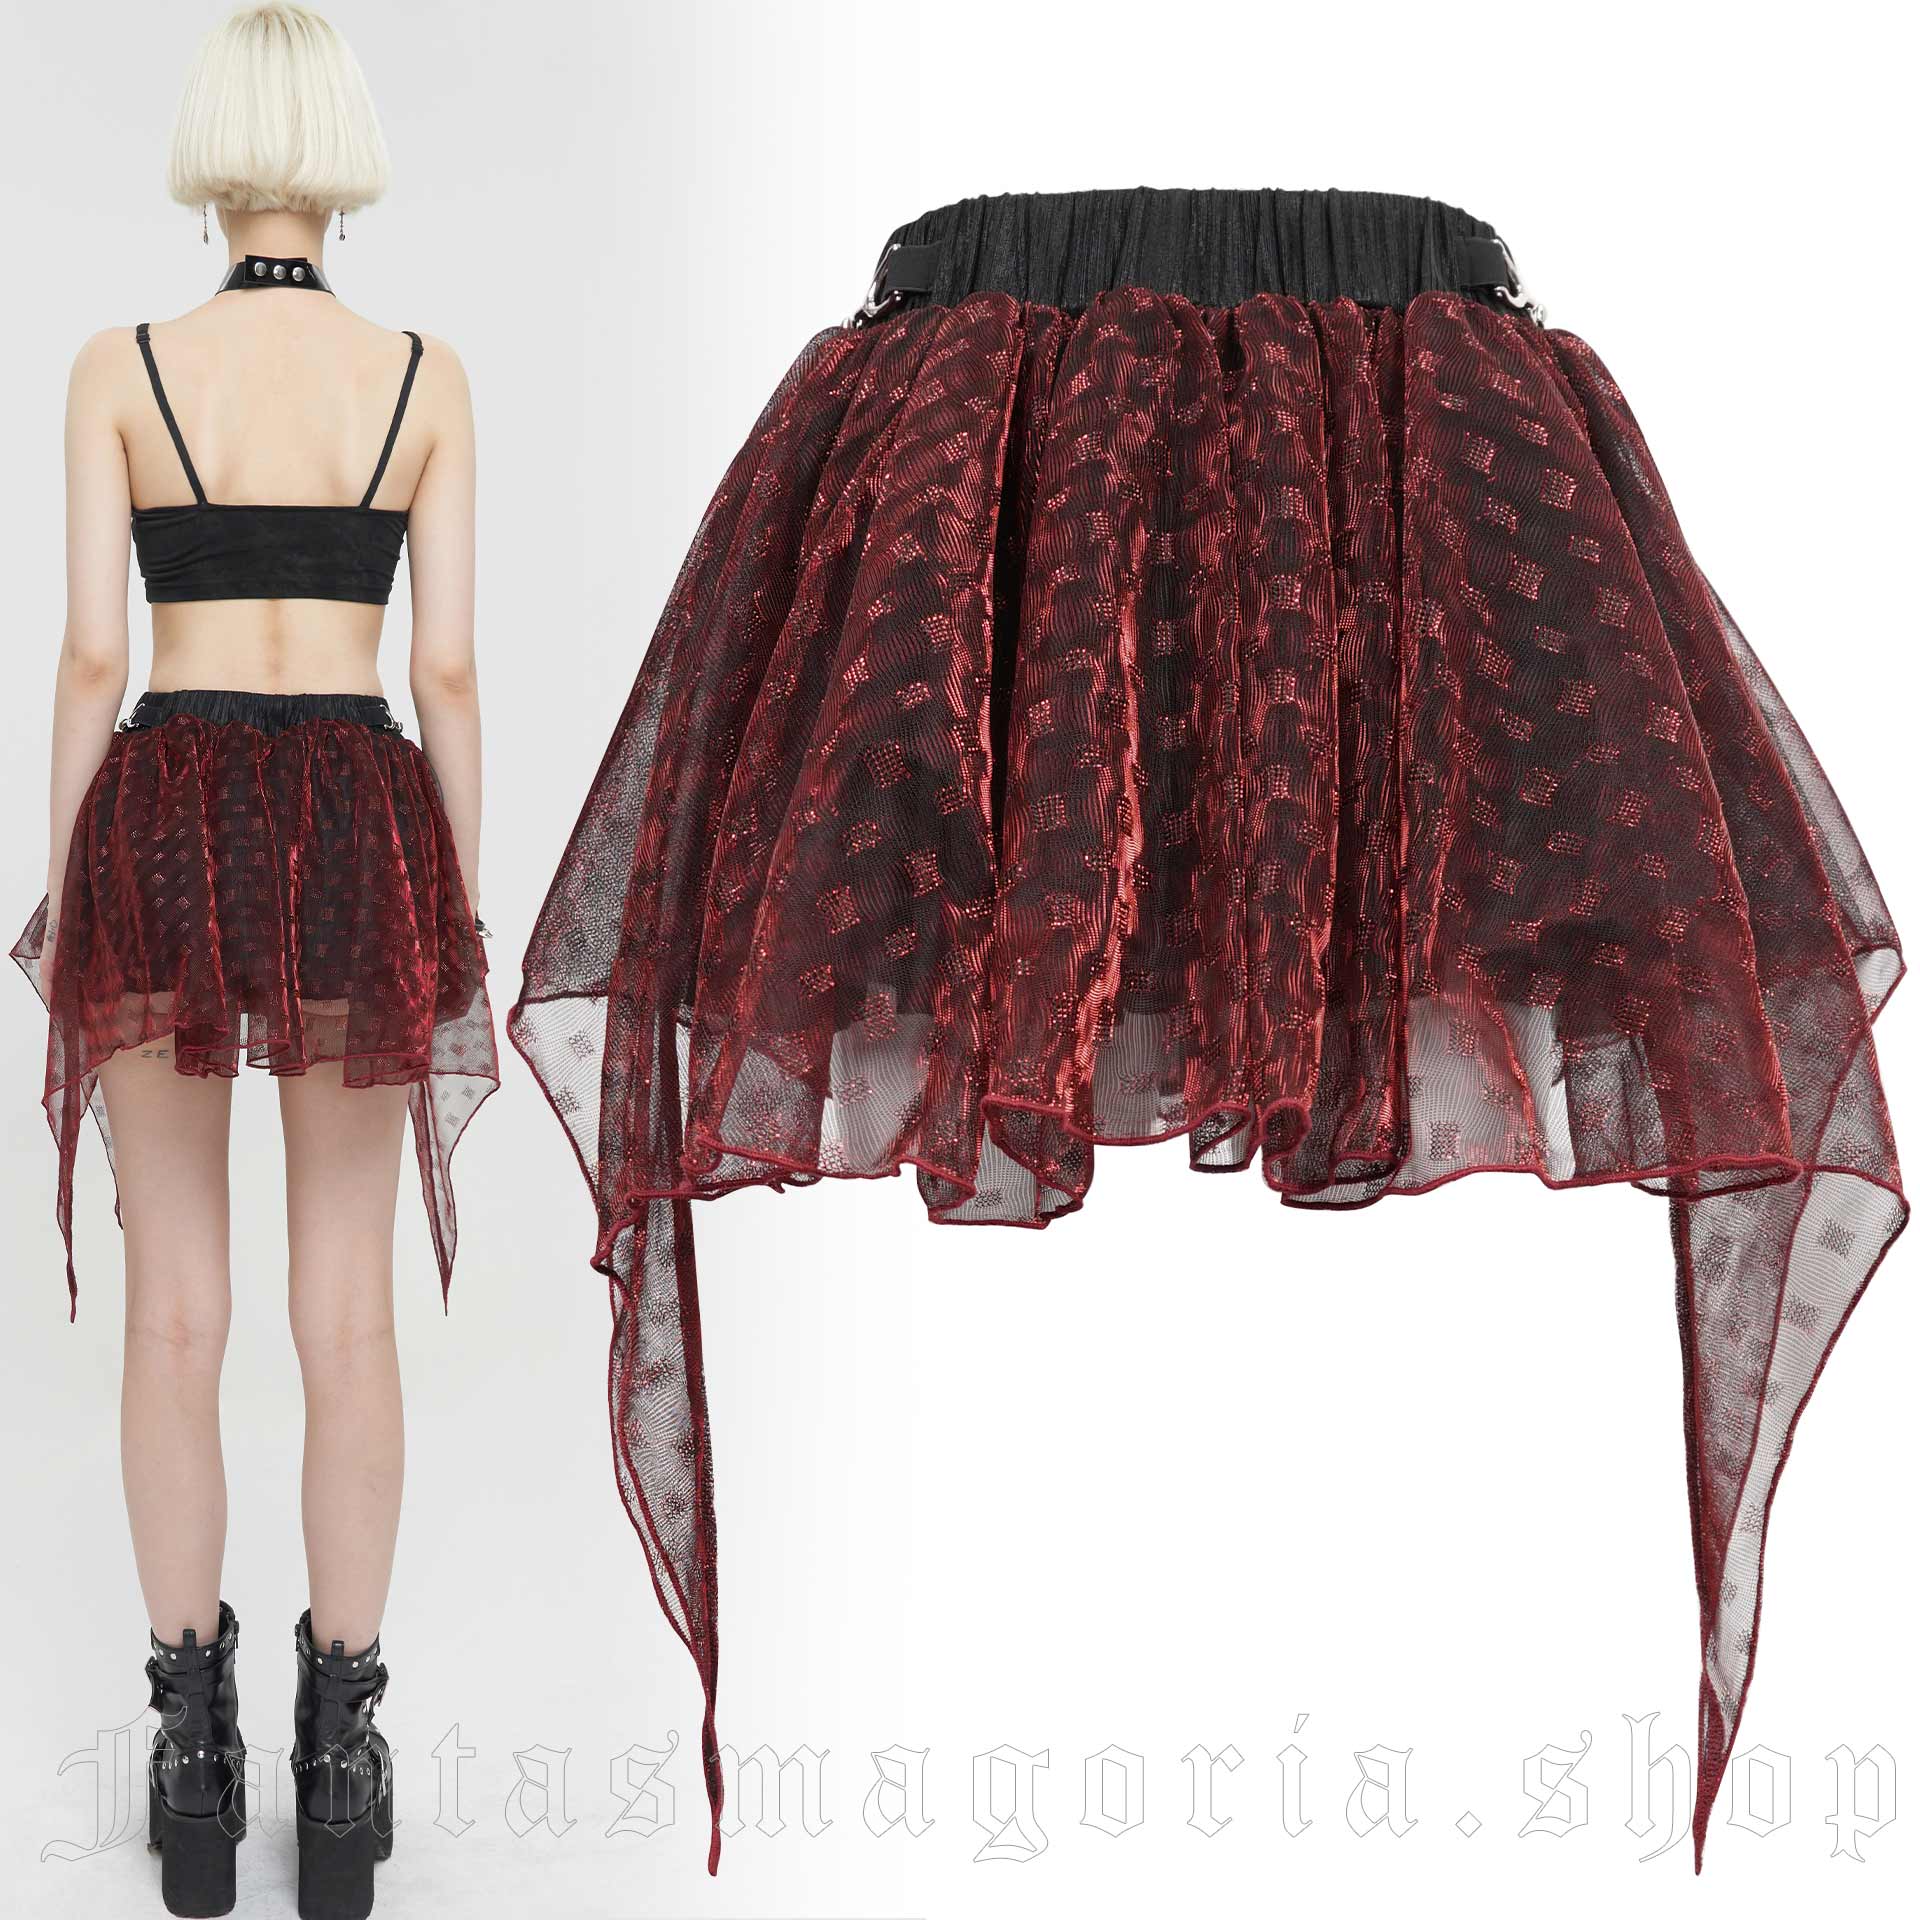 Blood Doll Skirt